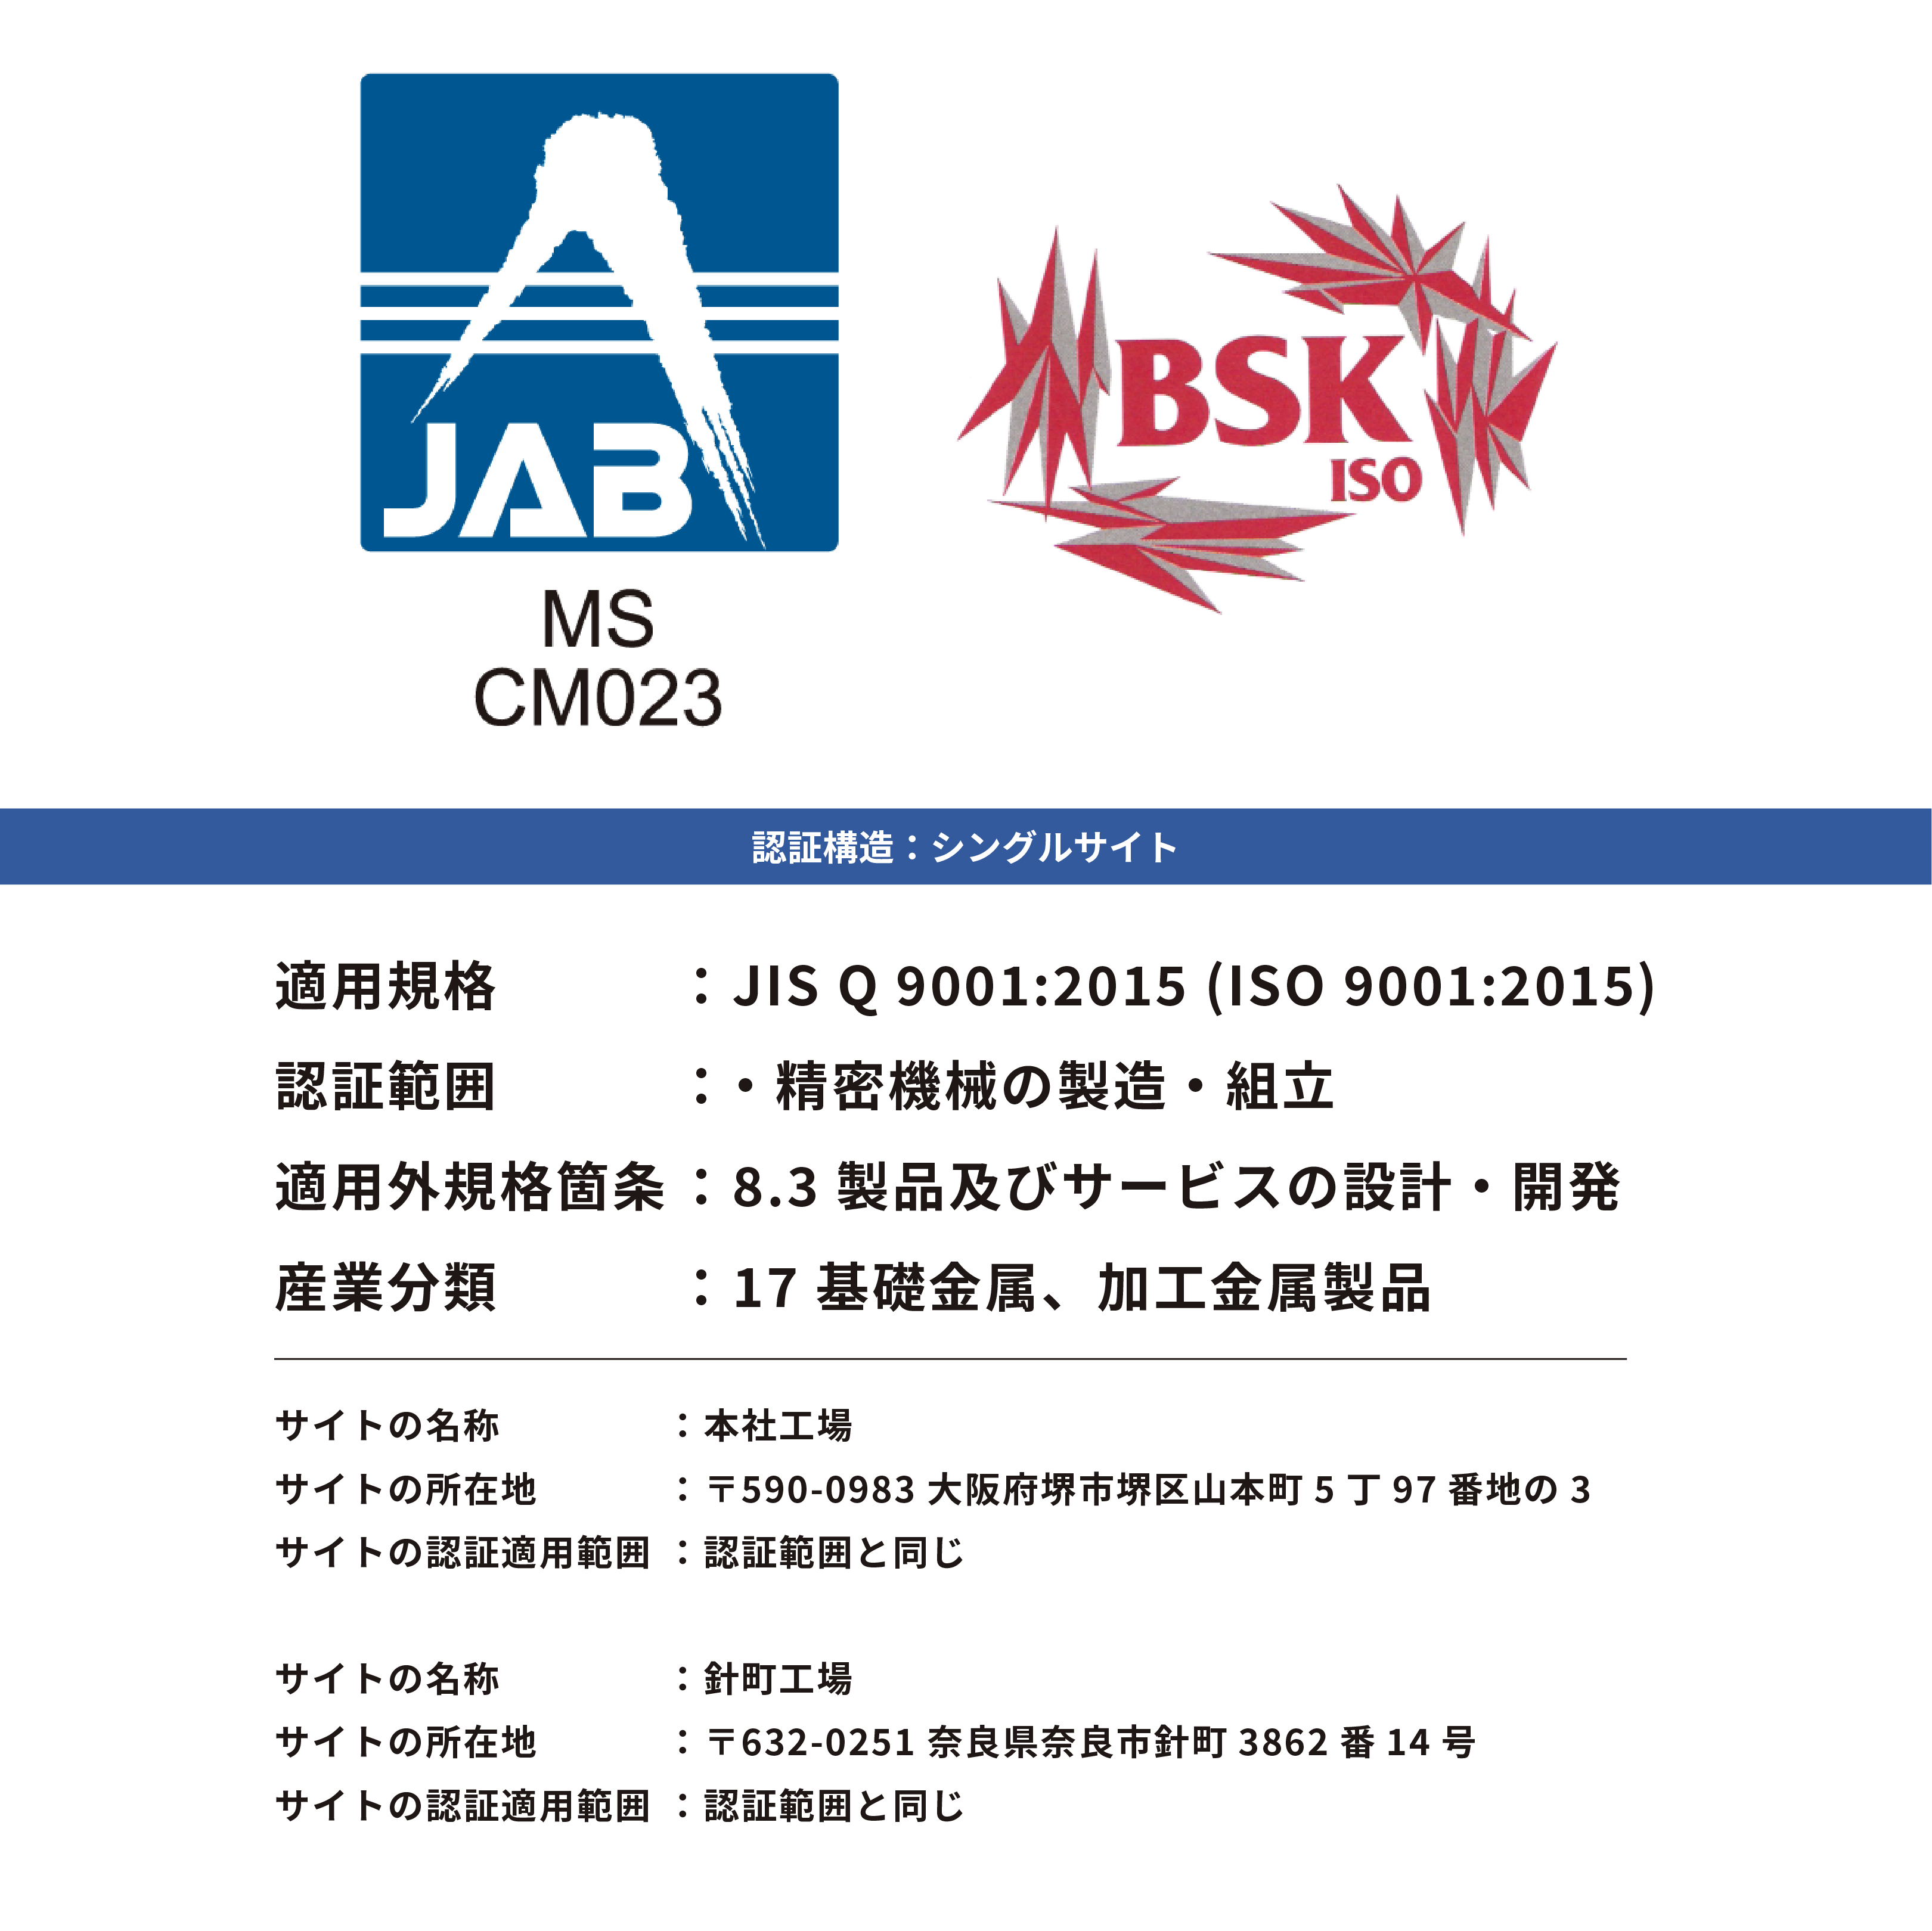 MS JAB・BSK ISO／認証構造:シングルサイト／適用規格：JIS Q 9001:2015 (ISO 9001:2015)／認証範囲:・精密機械の製造・組立／適用外規格箇条：8.3 製品及びサービスの設計・開発／產業分類：17 基礎金属、加工金属製品／サイトの名称：本社工場／サイトの所在地：〒590-0983 大阪府堺市堺区山本町5丁97番地の3／サイトの認証適用範囲：認証範囲と同じ／サイトの名称：針町工場／サイトの所在地：〒632-0251 奈良県奈良市針町 3862 番14号／サイトの認証適用範囲：認証範囲と同じ